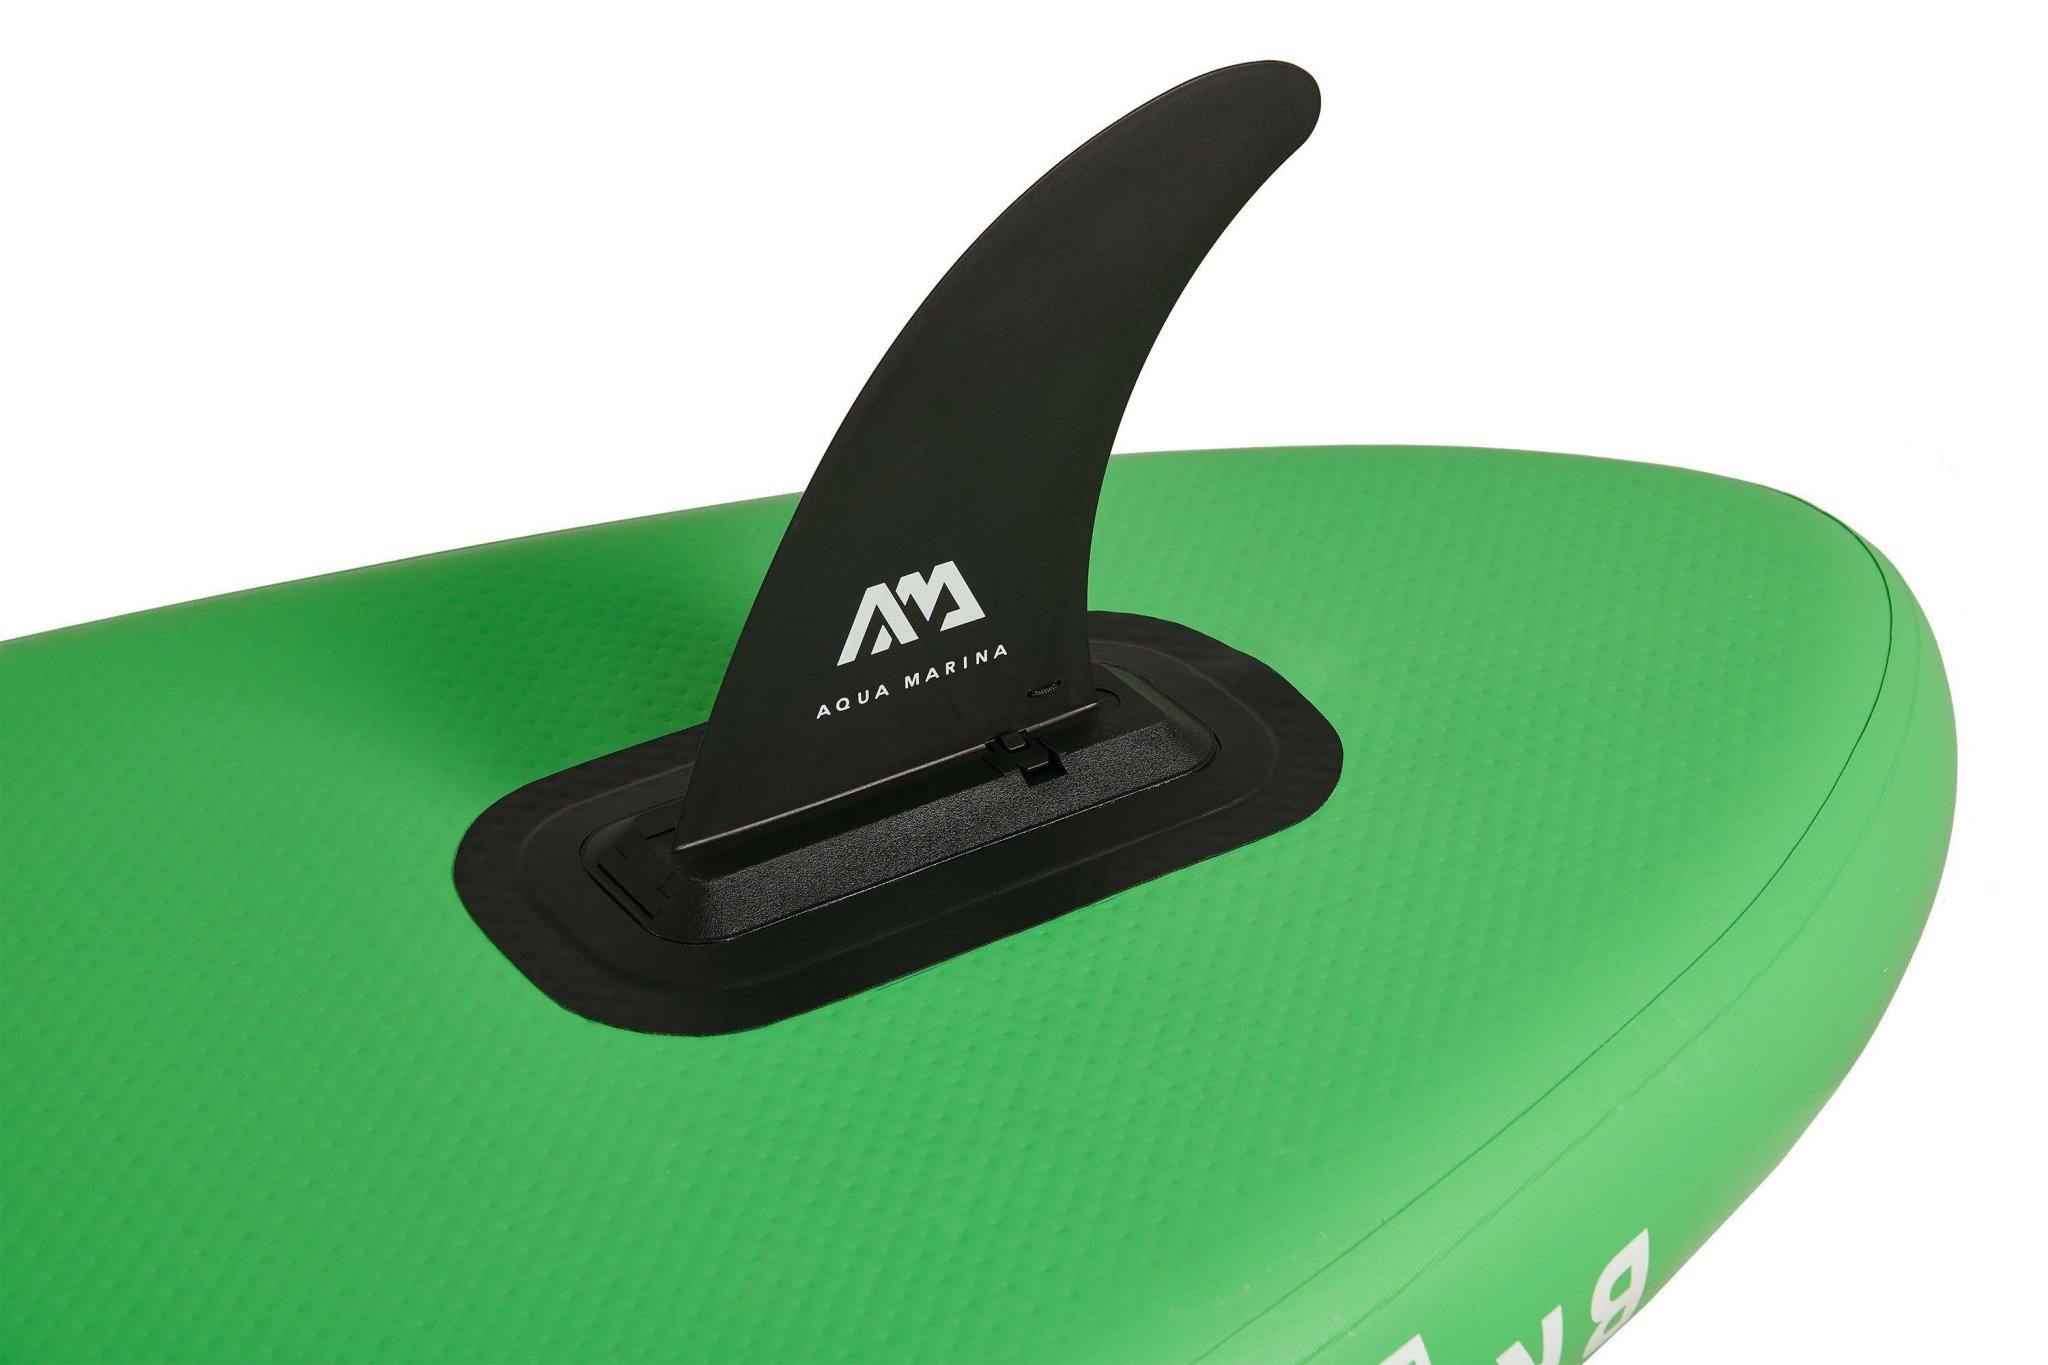 Breeze All-Around iSUP Paddle Board - DTI Direct USA